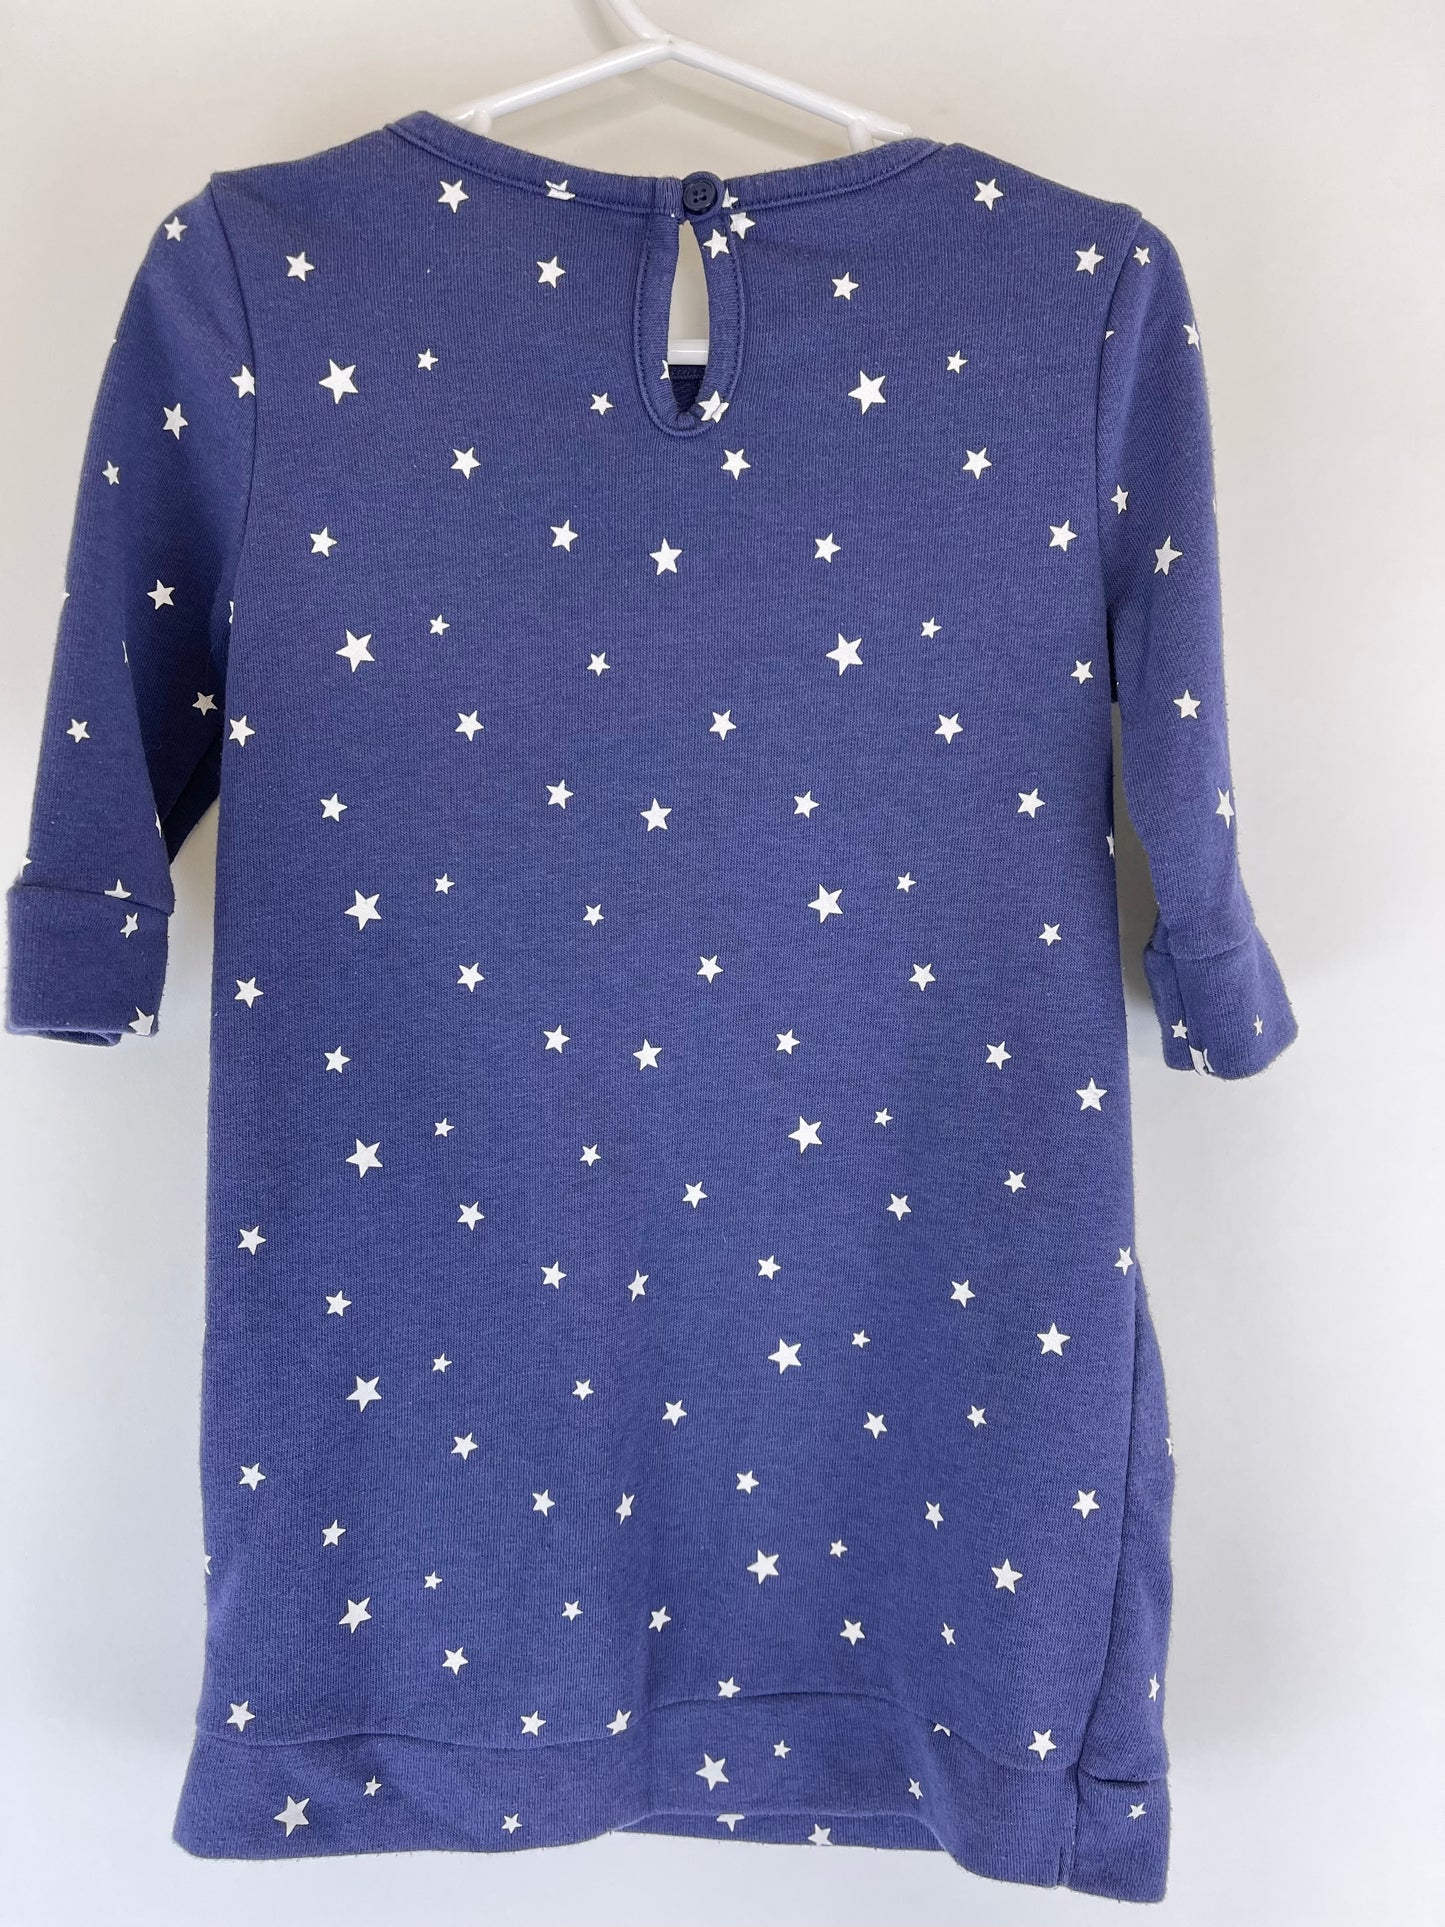 Old Navy Blue & White Stars Zippered Pockets Dress - 3T